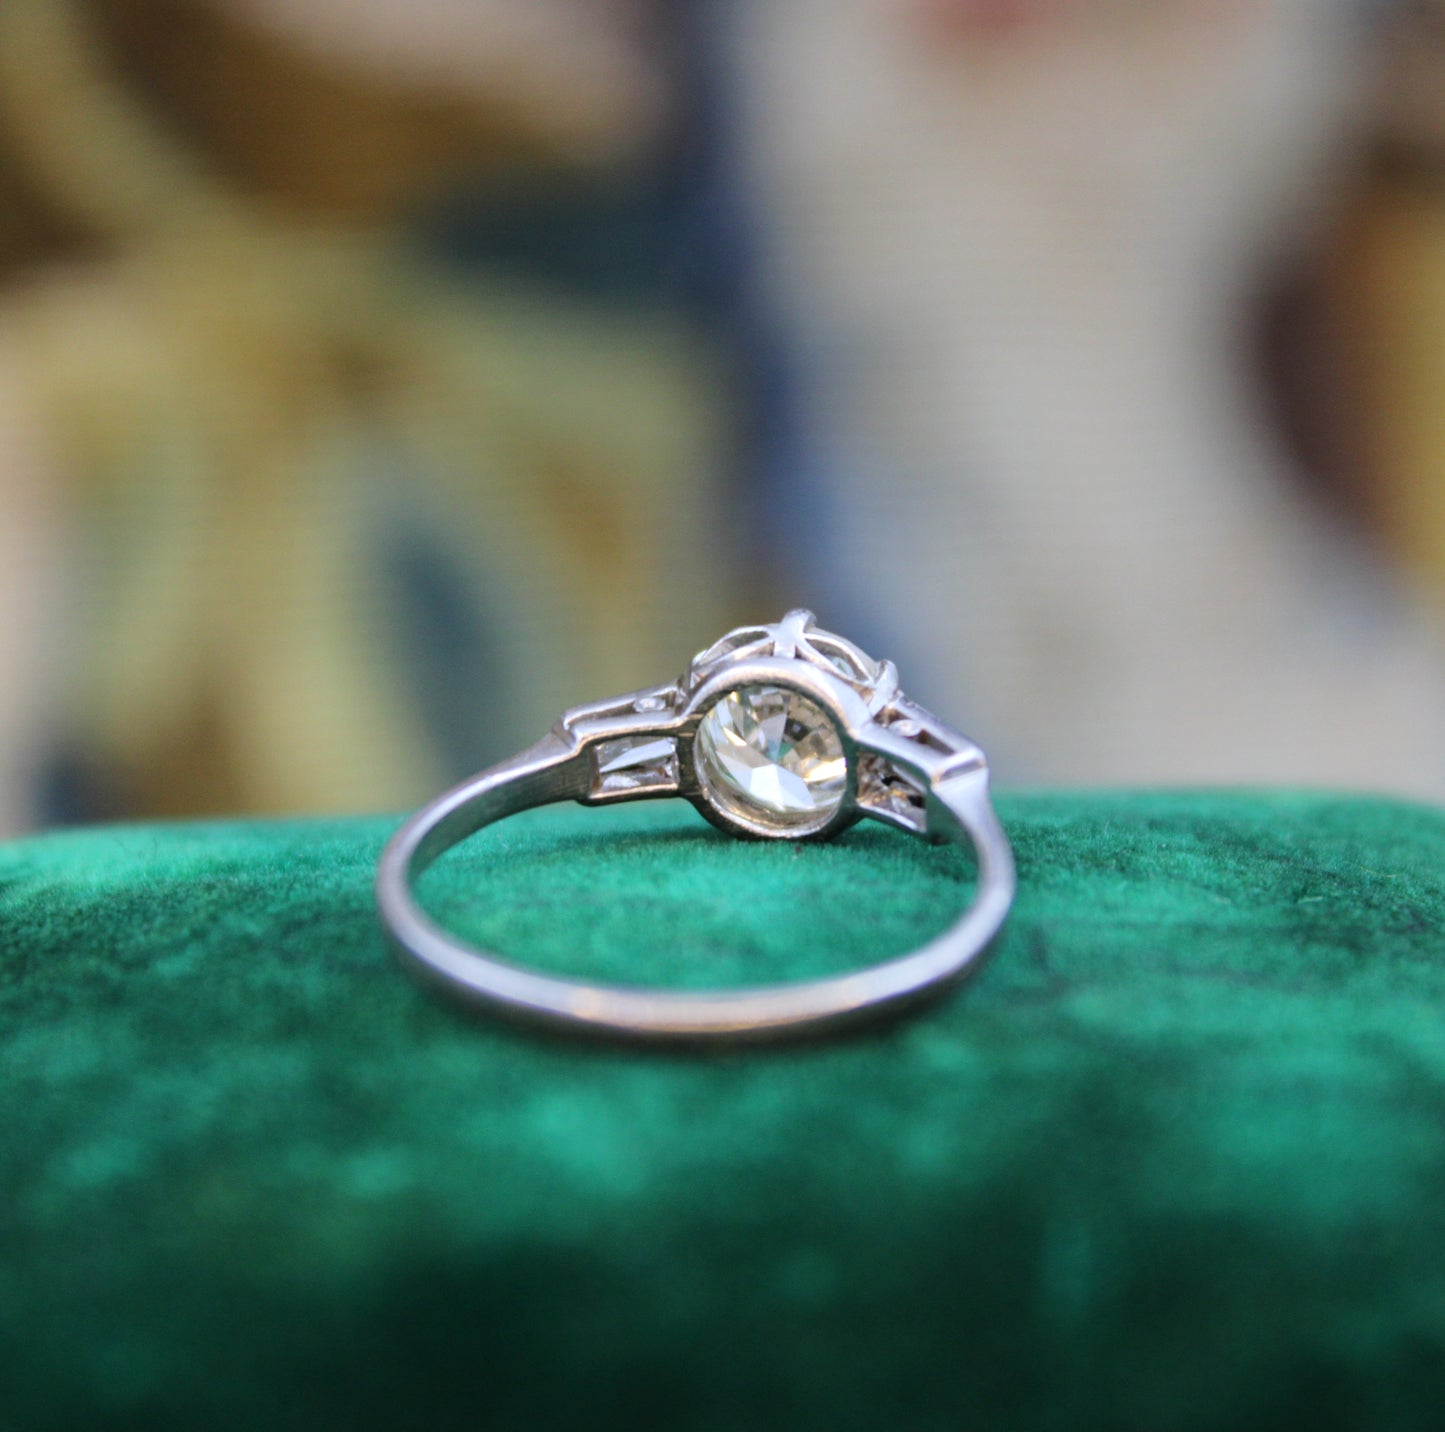 A Beautiful 1.04 Carat, Art Deco, Diamond Solitaire Engagement Ring, with Baguette-cut Diamond  Shoulders, set in Platinum.  Circa 1930 - Robin Haydock Antiques